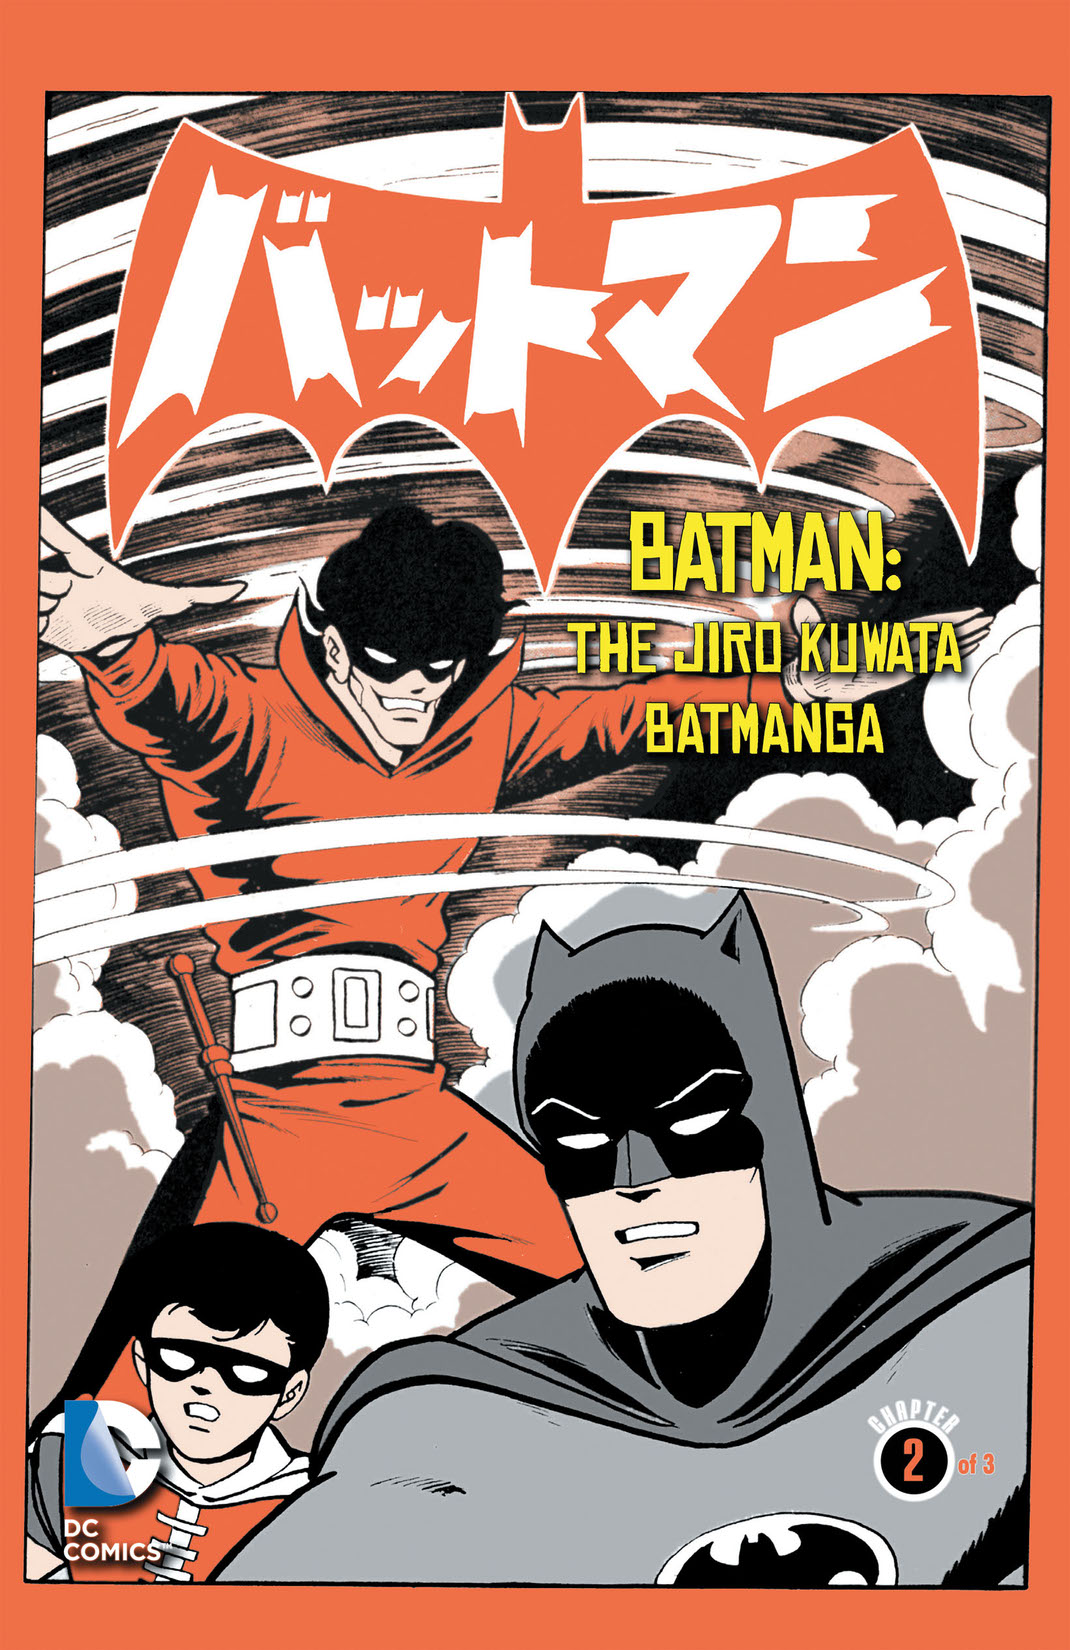 Batman: The Jiro Kuwata Batmanga #14 preview images